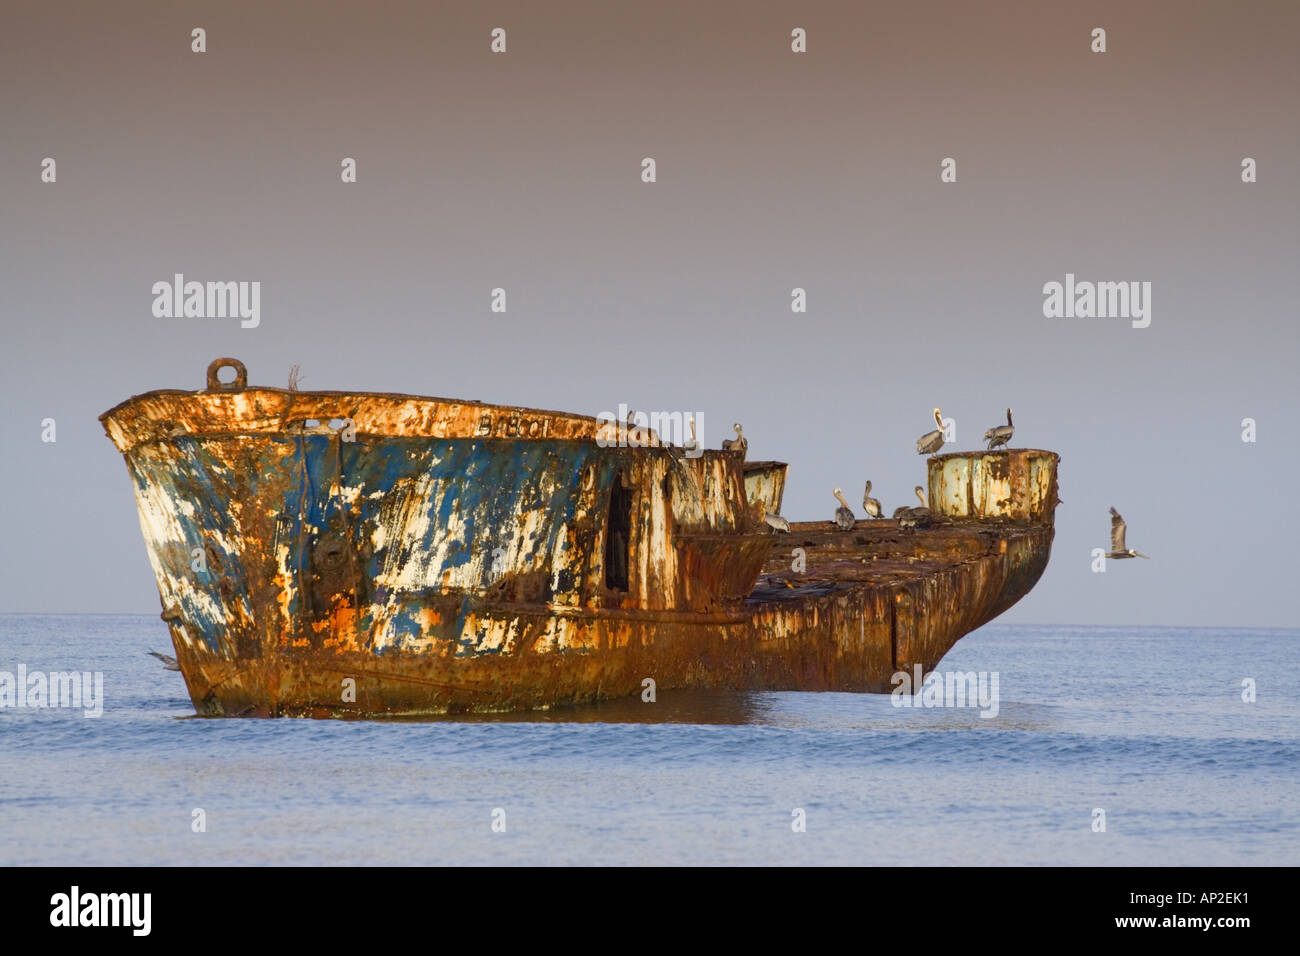 Rusting ship hull grounded in Aruba waters near Hadicurari beach Stock Photo